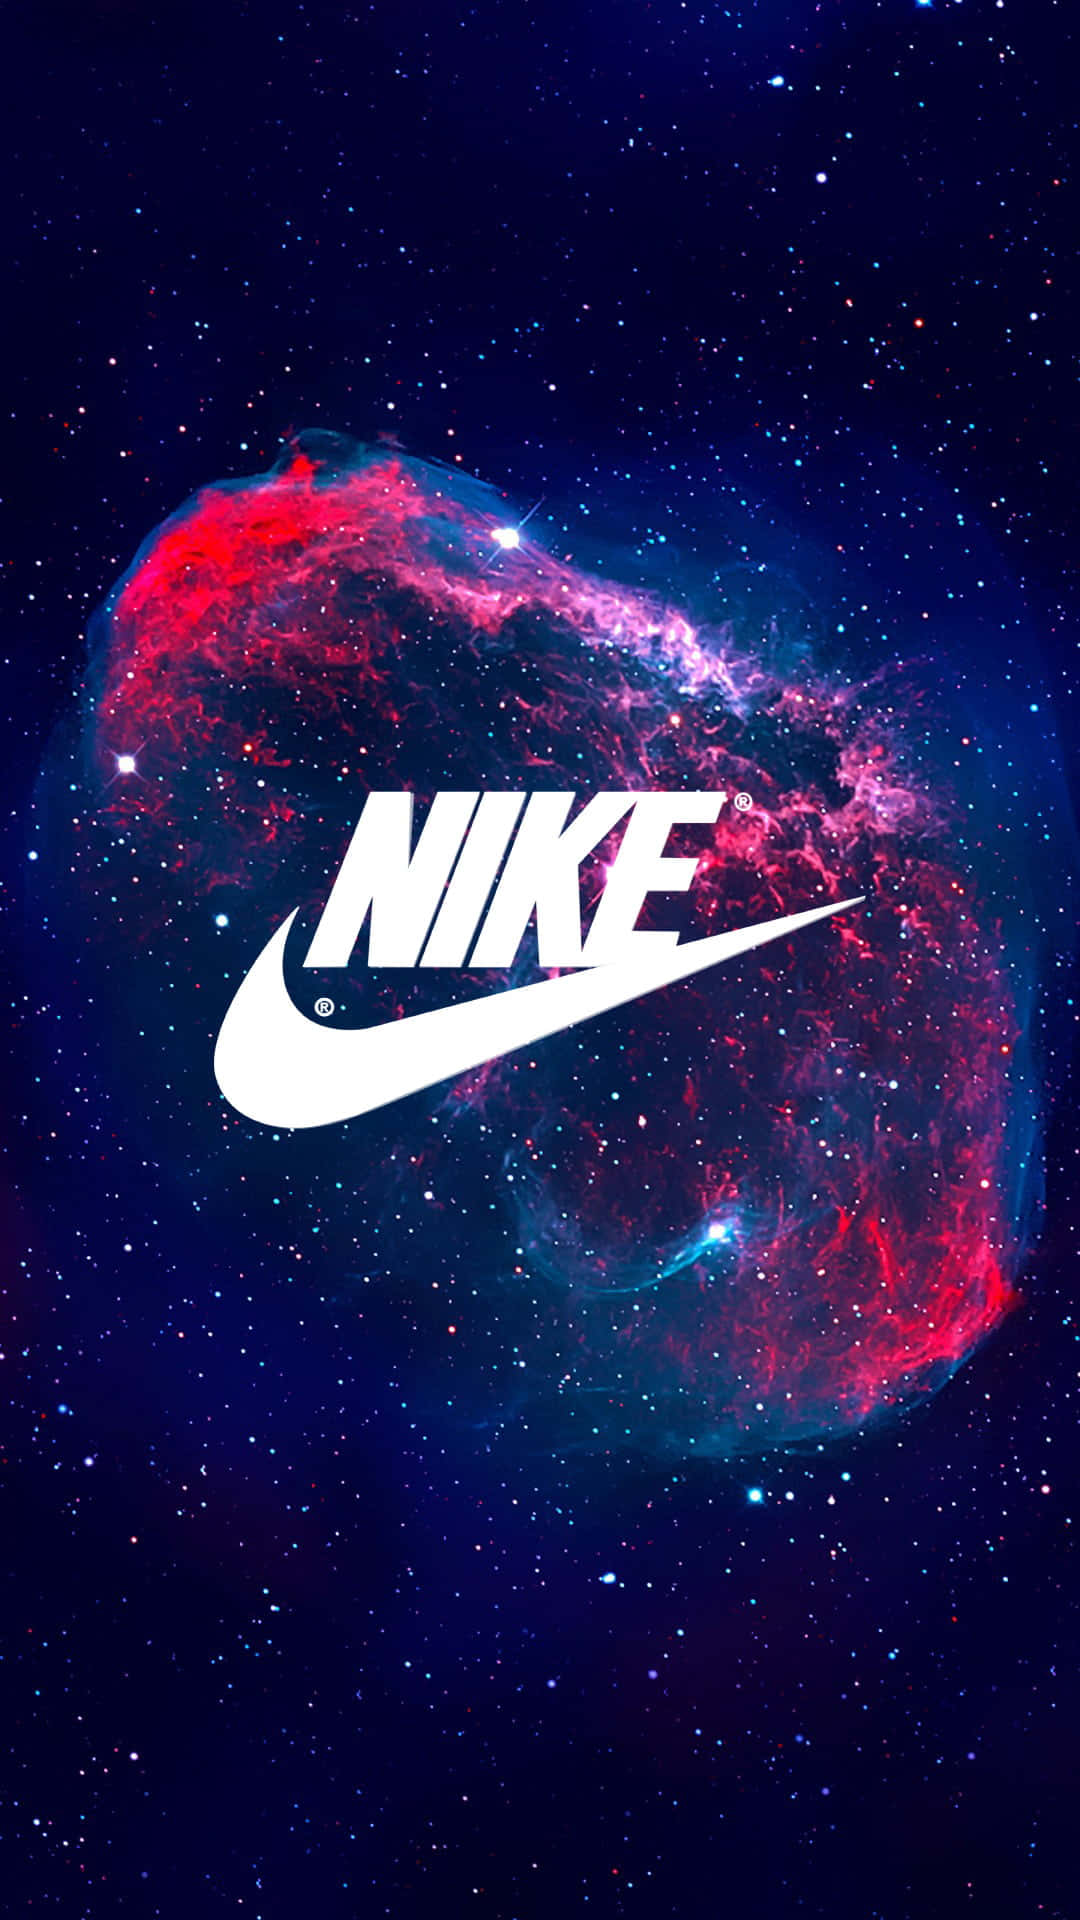 Free Nike Galaxy Wallpaper Downloads, [100+] Nike Galaxy Wallpapers for  FREE 